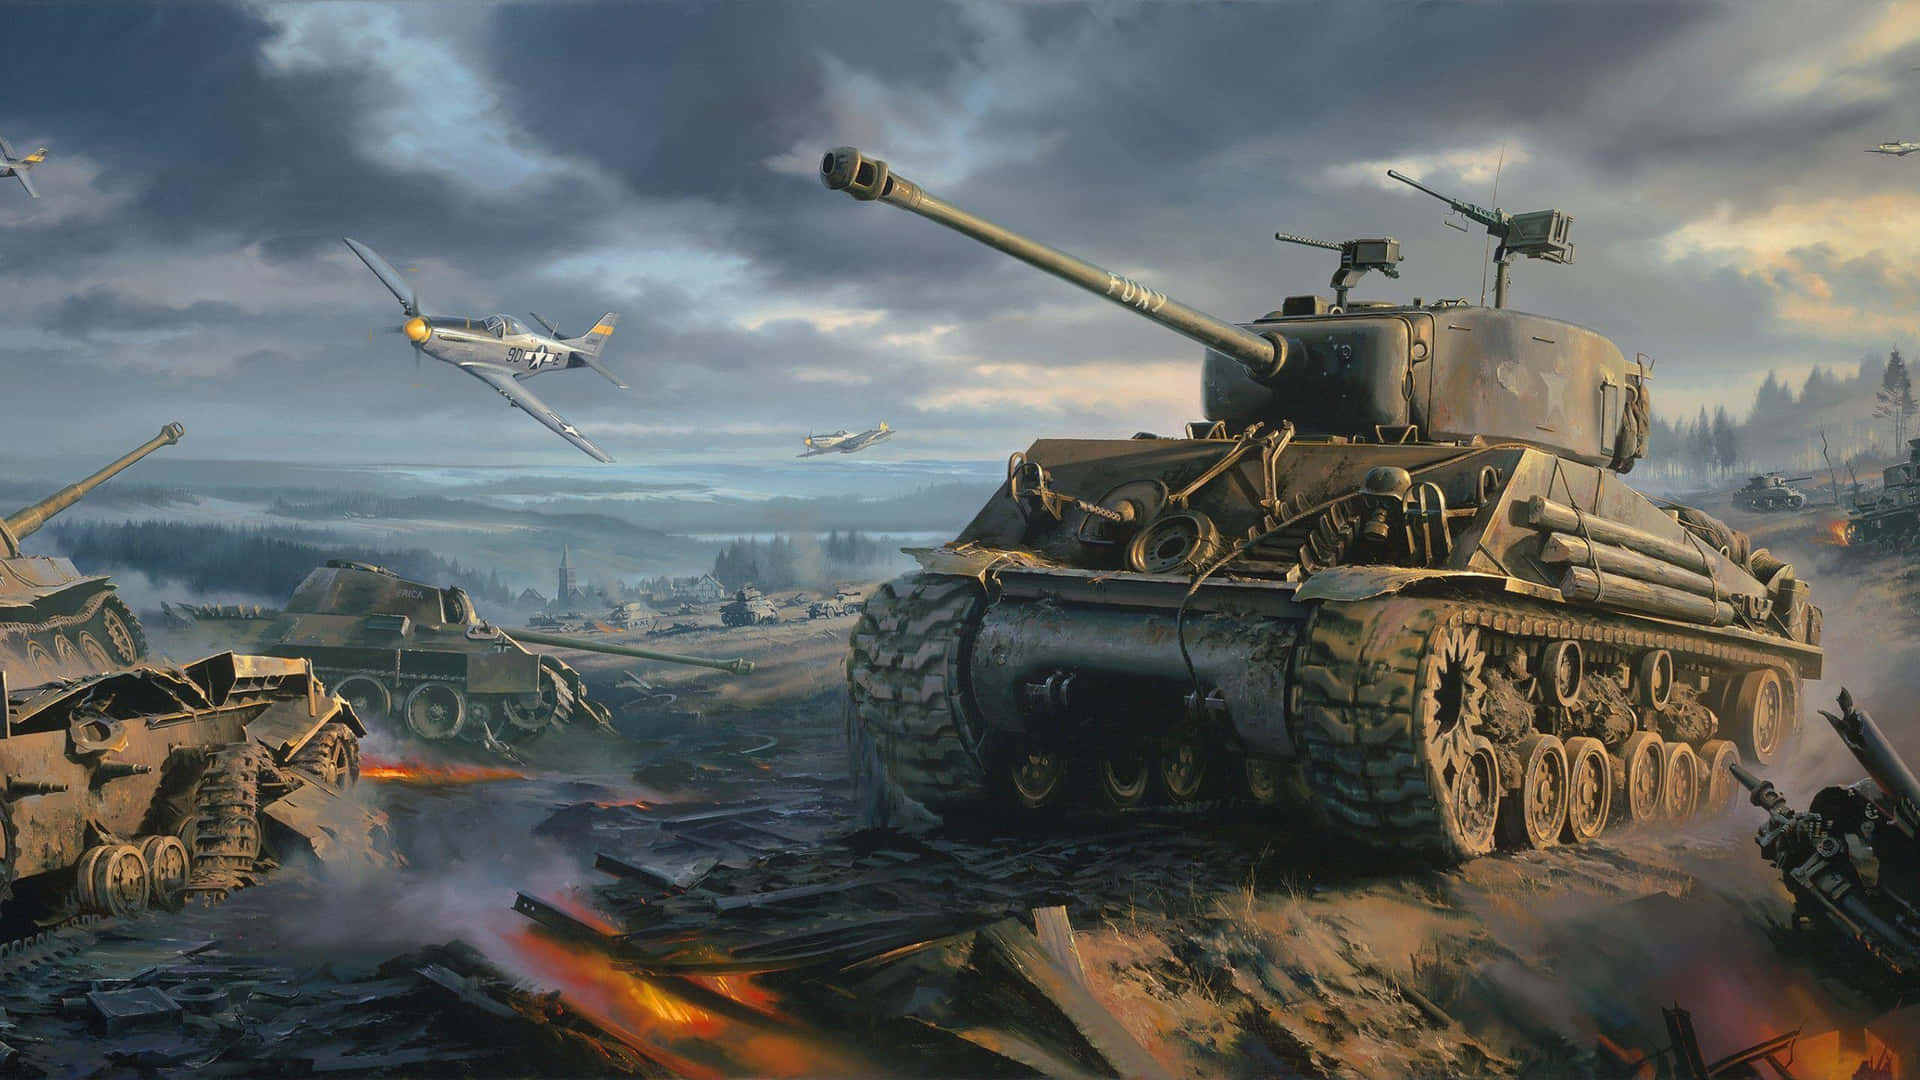 W W I I_ Tank_and_ Aircraft_ Battle_ Scene Wallpaper